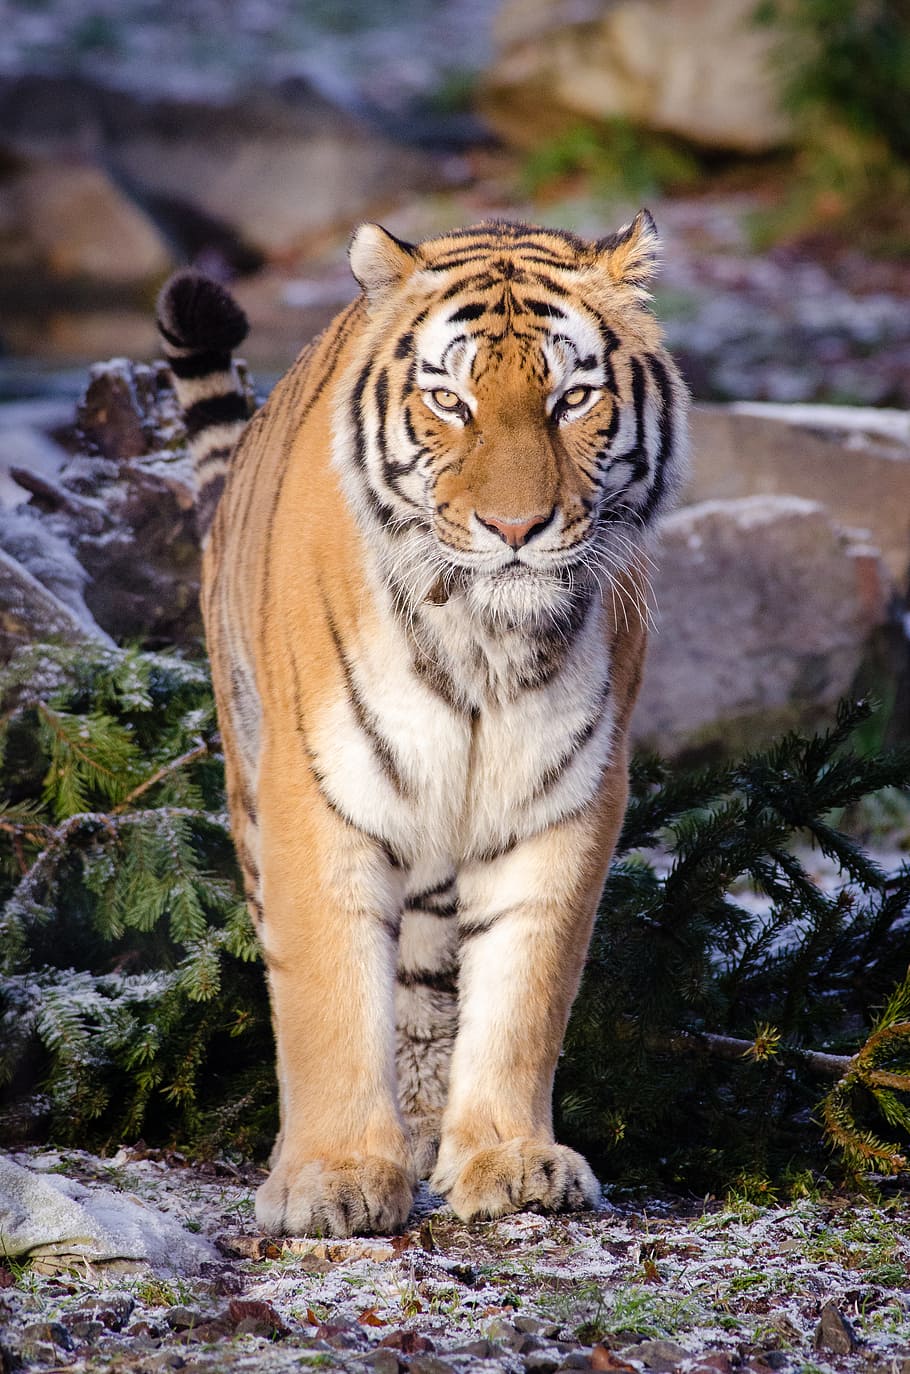 Tigre siberiano, tigre naranja y blanco, Temas de animales, animal, mamífero, felino, fauna animal, gato grande, tigre, animales salvajes